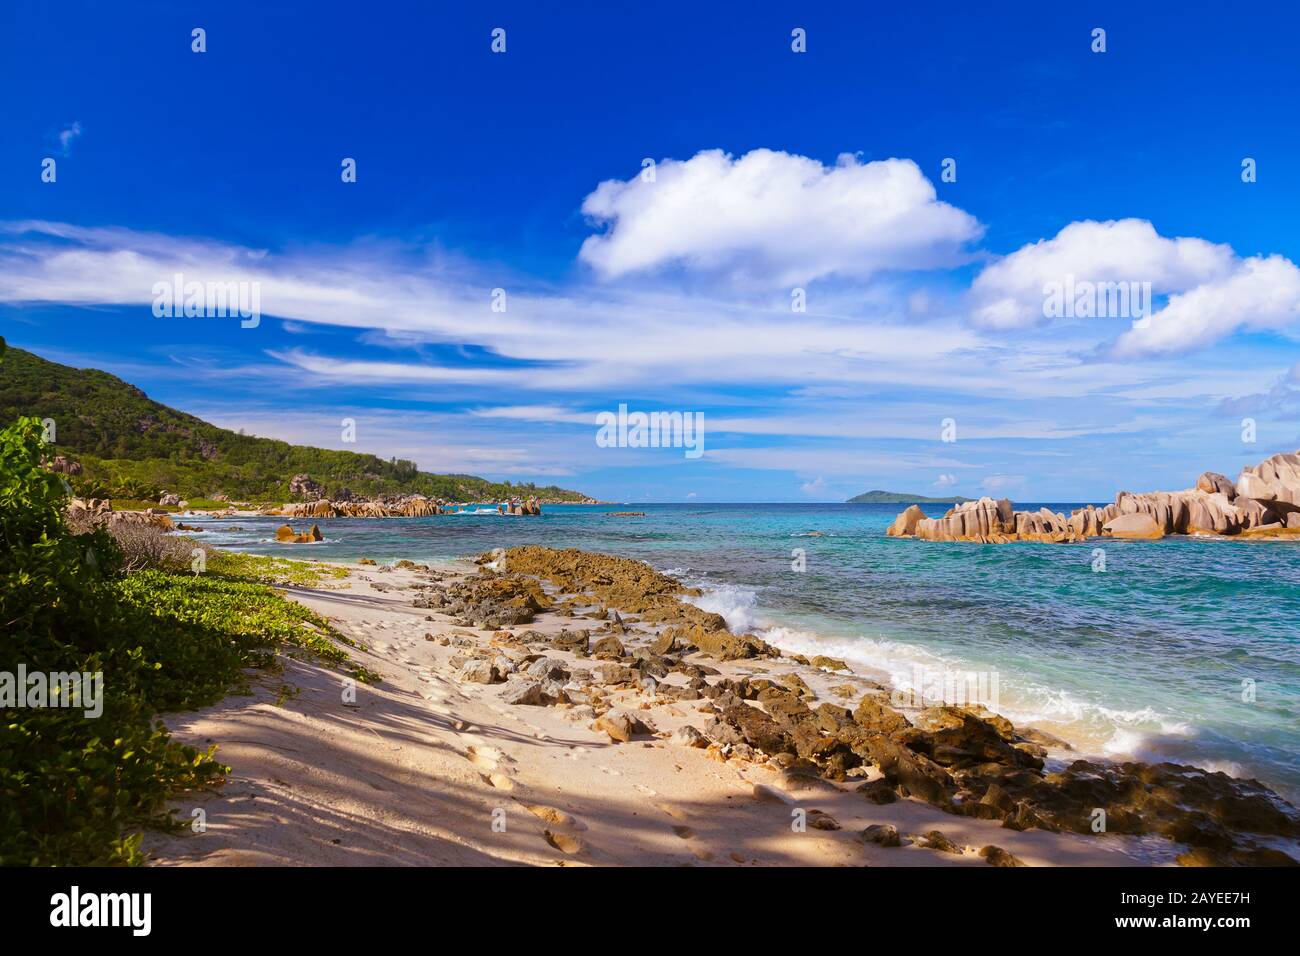 Tropical beach at Seychelles Stock Photo